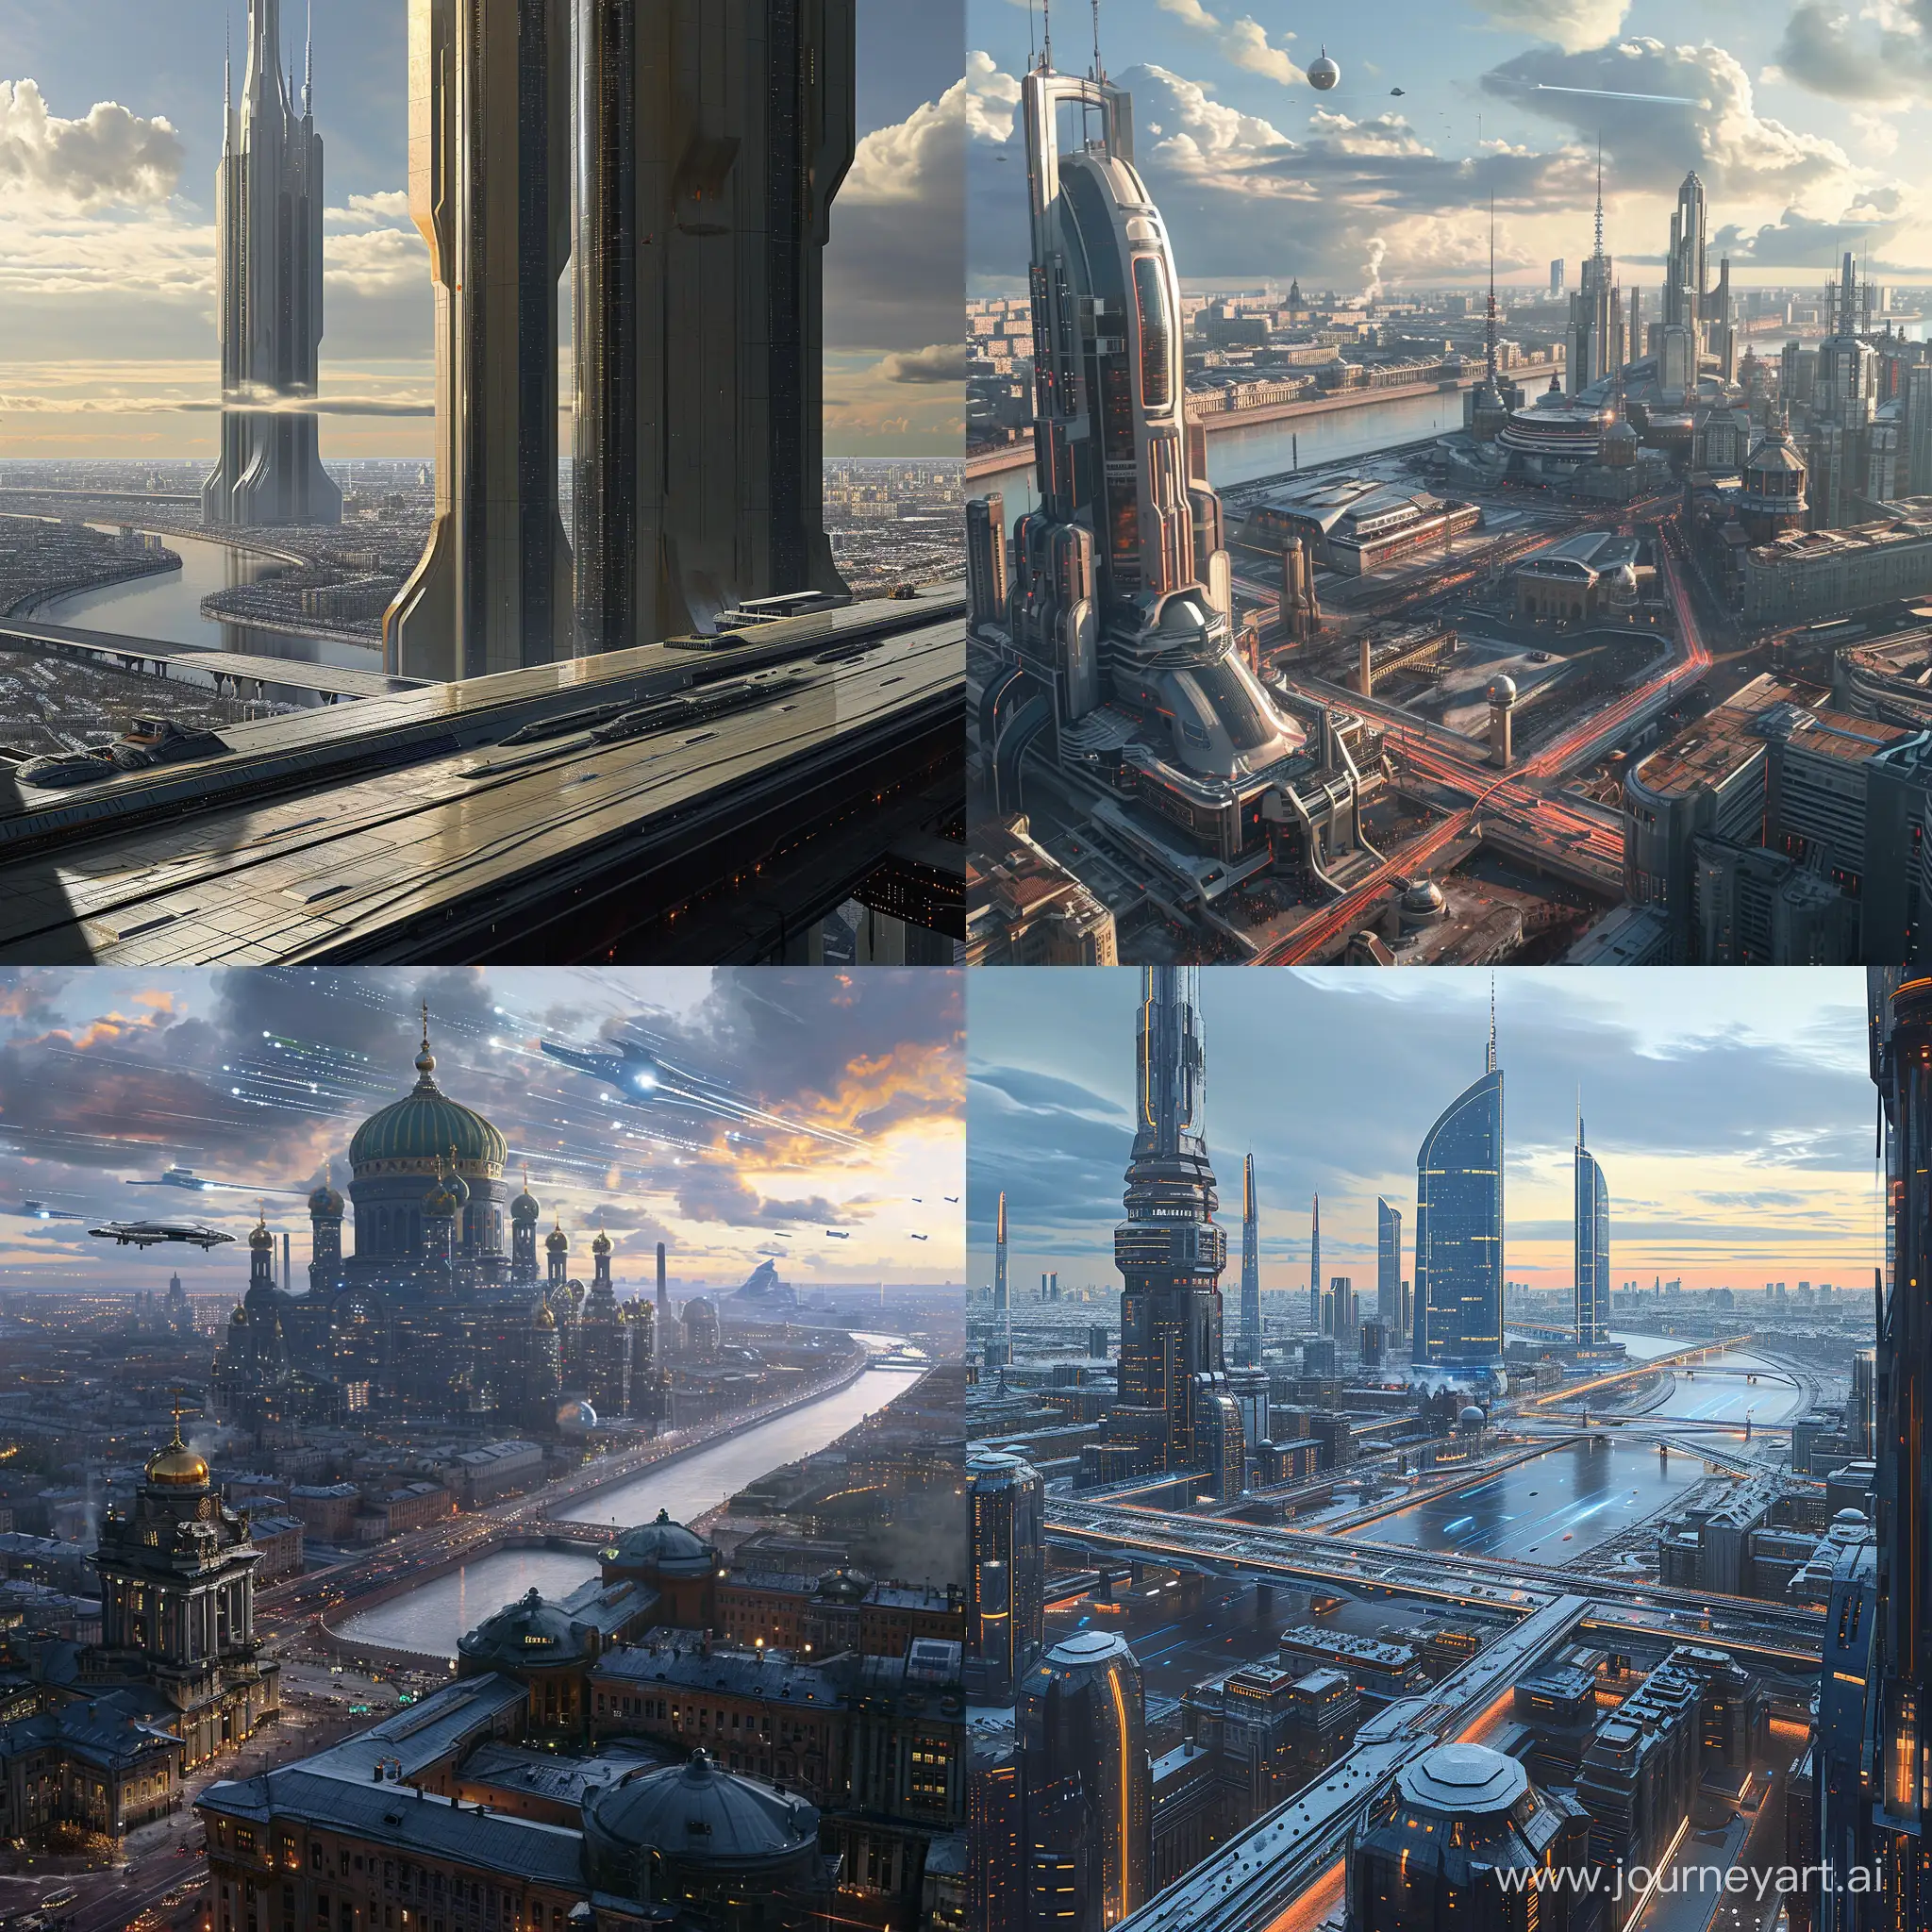 Futuristic-Saint-Petersburg-Skyline-in-UltraScience-Fiction-Style